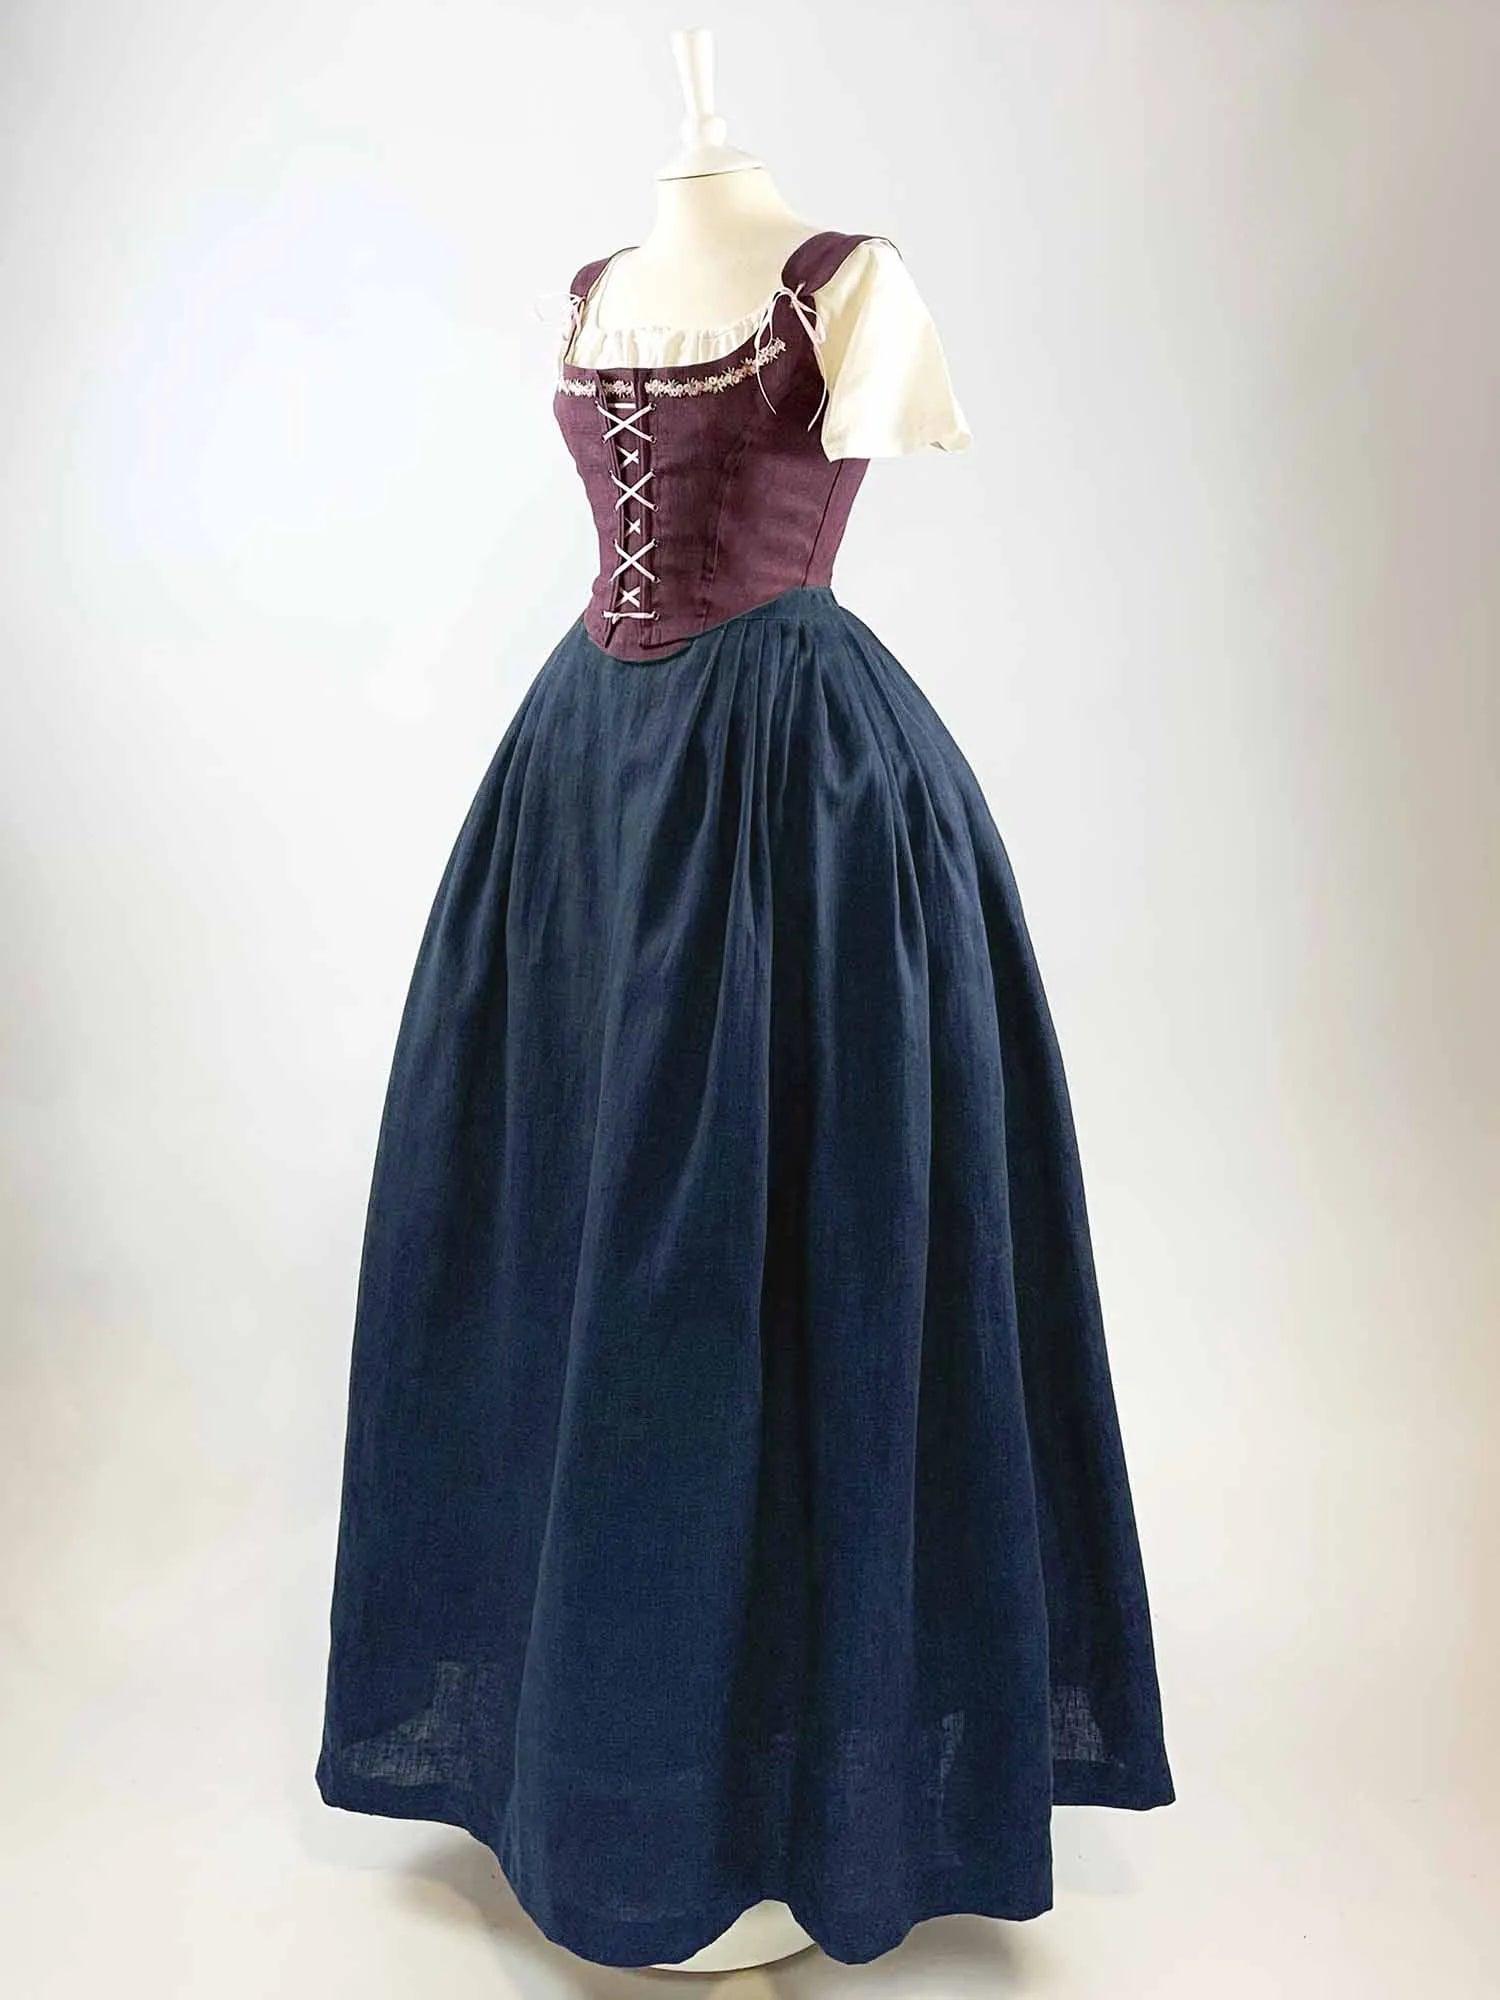 ISOLDE, Renaissance Costume in Purple & Navy Blue Linen - Atelier Serraspina - Costume Renaissance en Lin Violet et Bleu marine